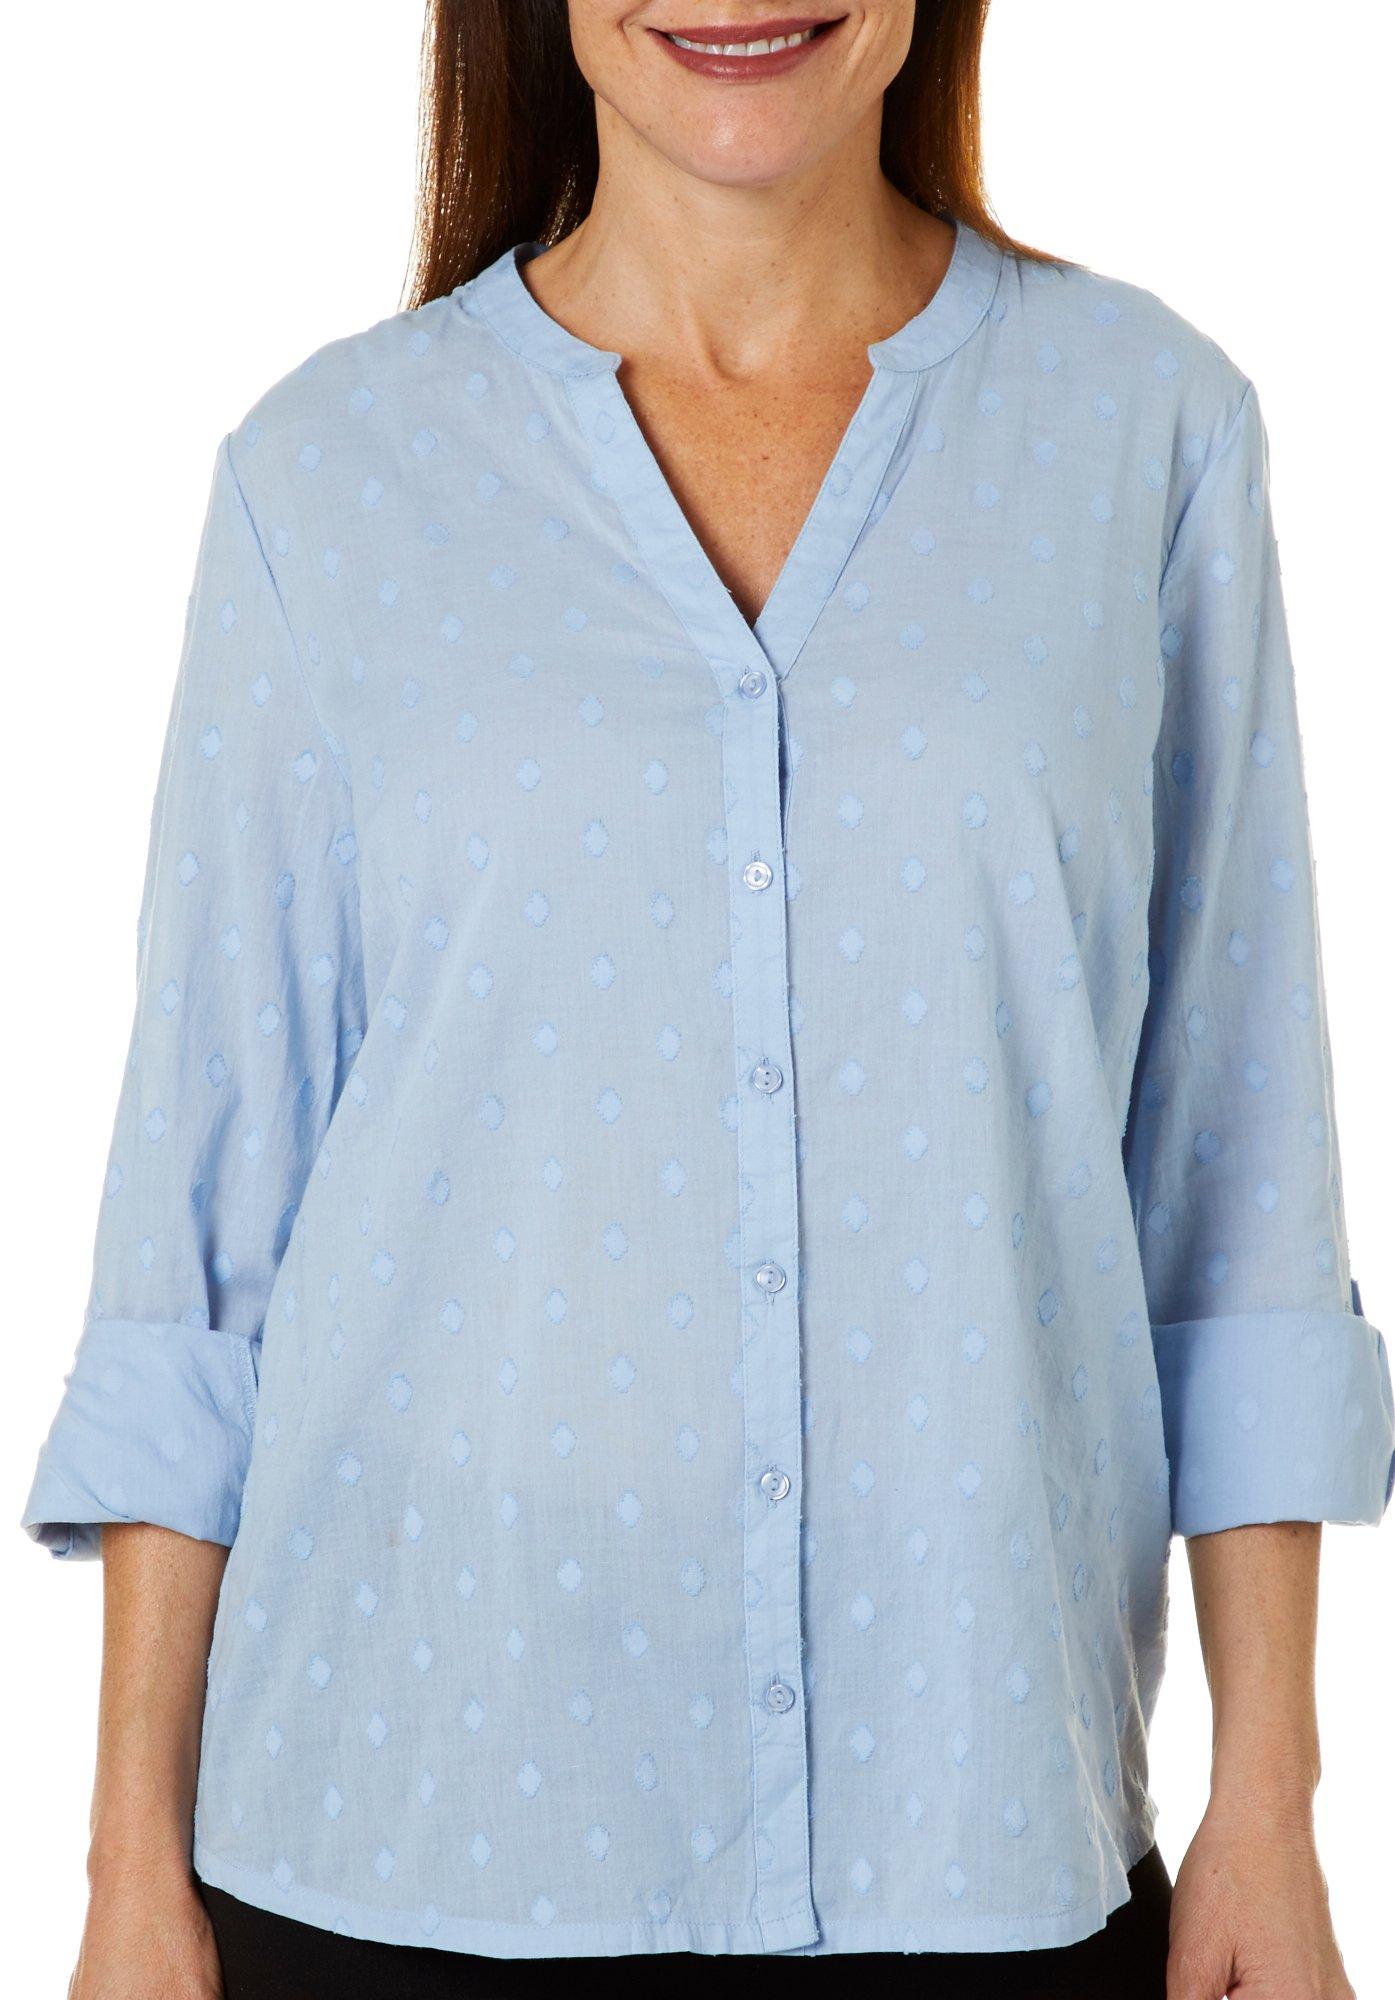 erika blouses xl for women reviews free